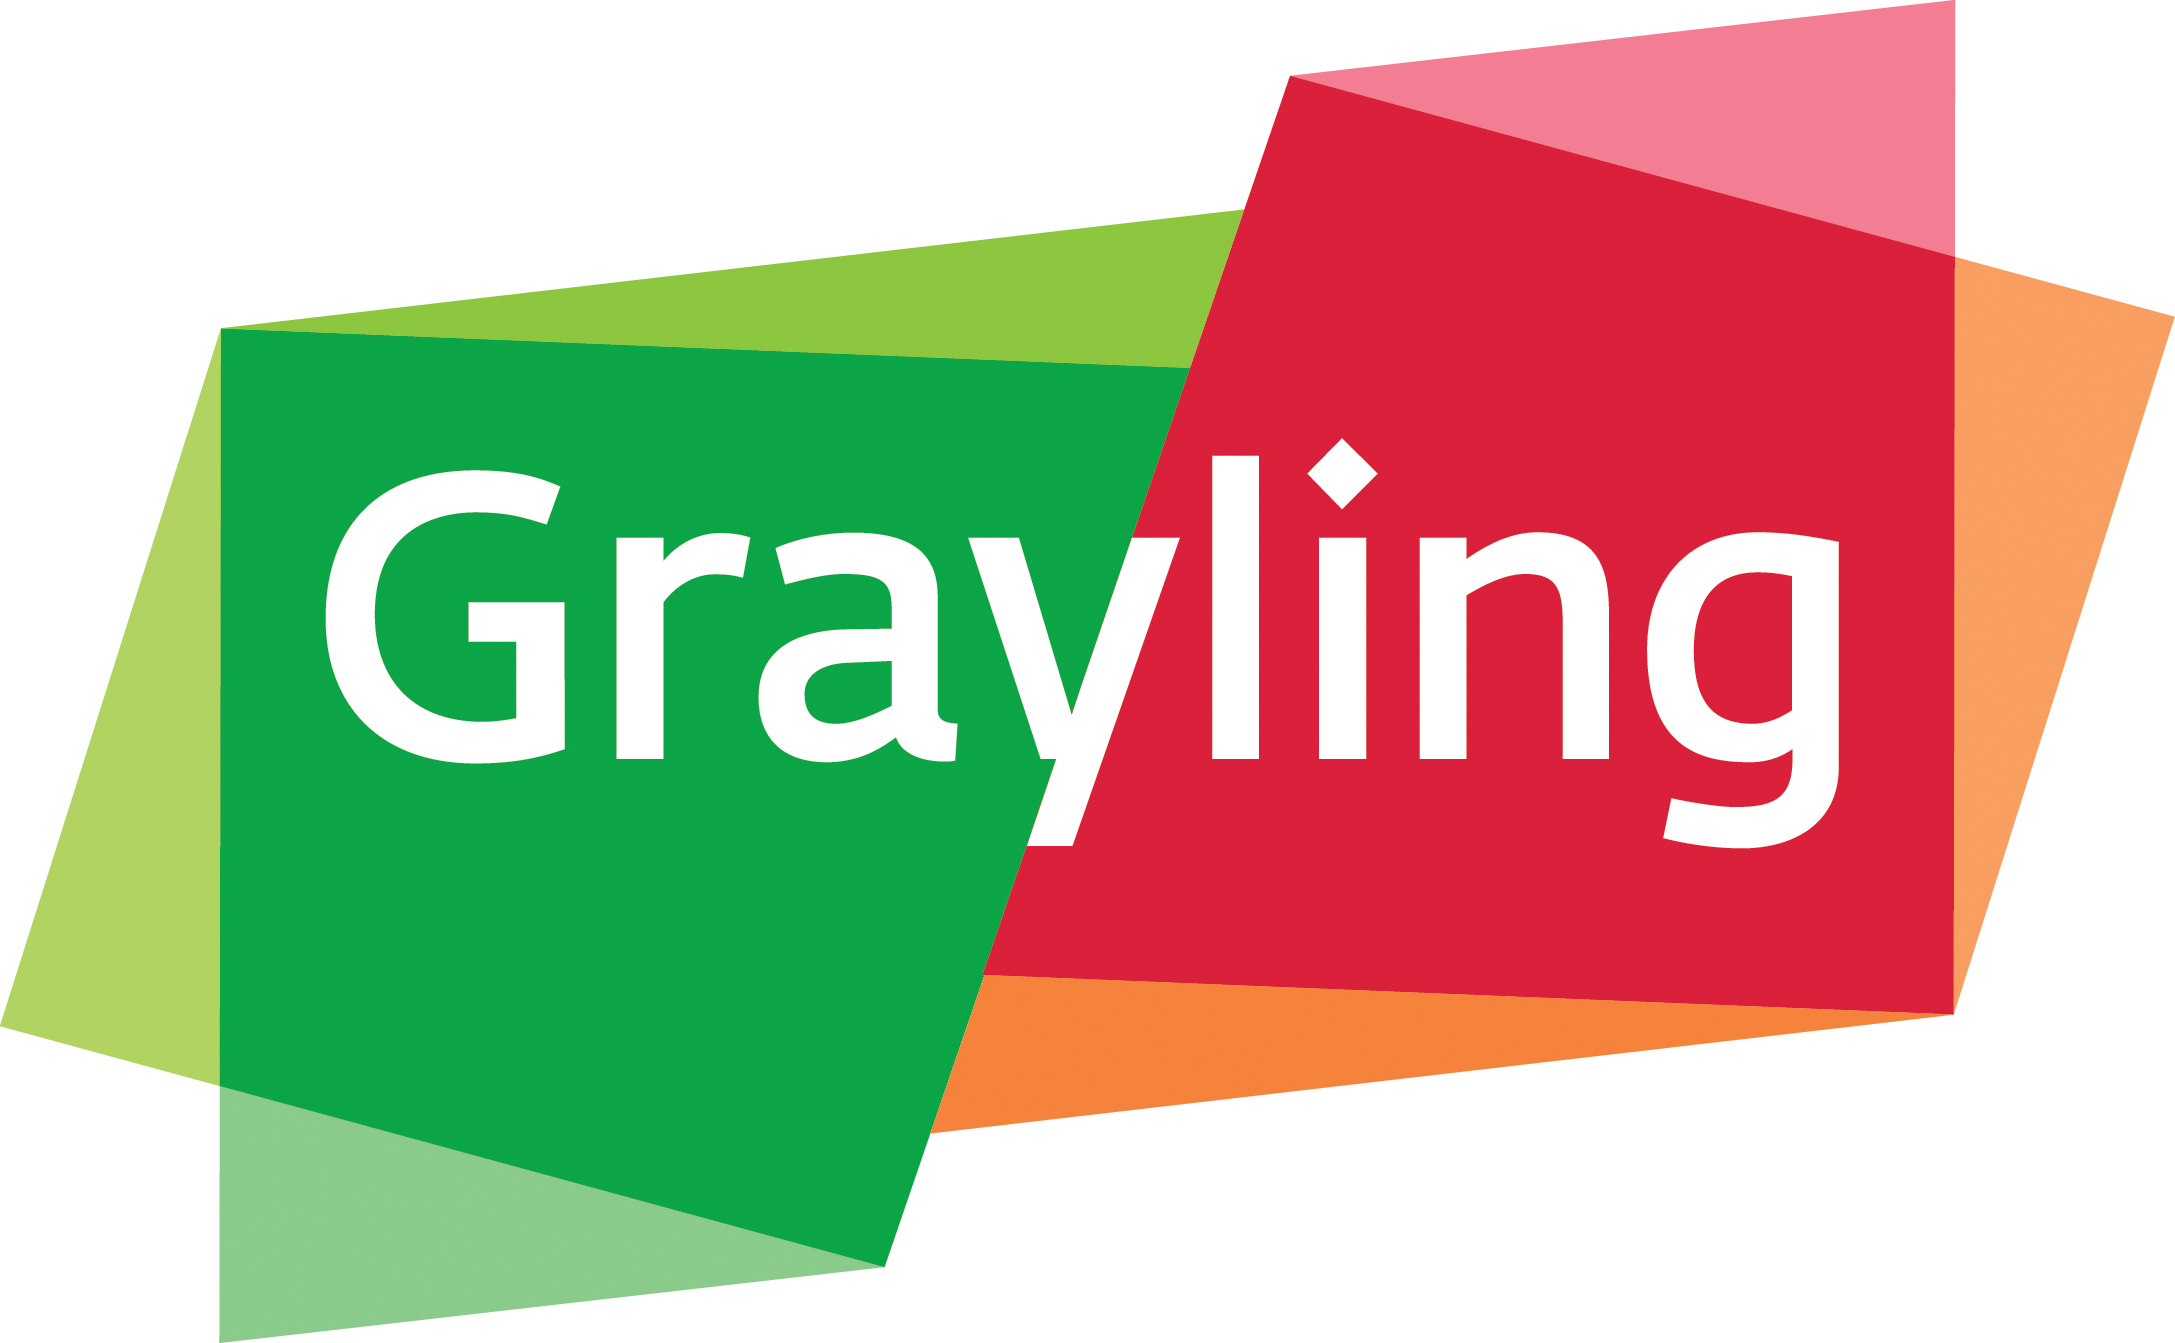  Top Public Relations Company Logo: Grayling